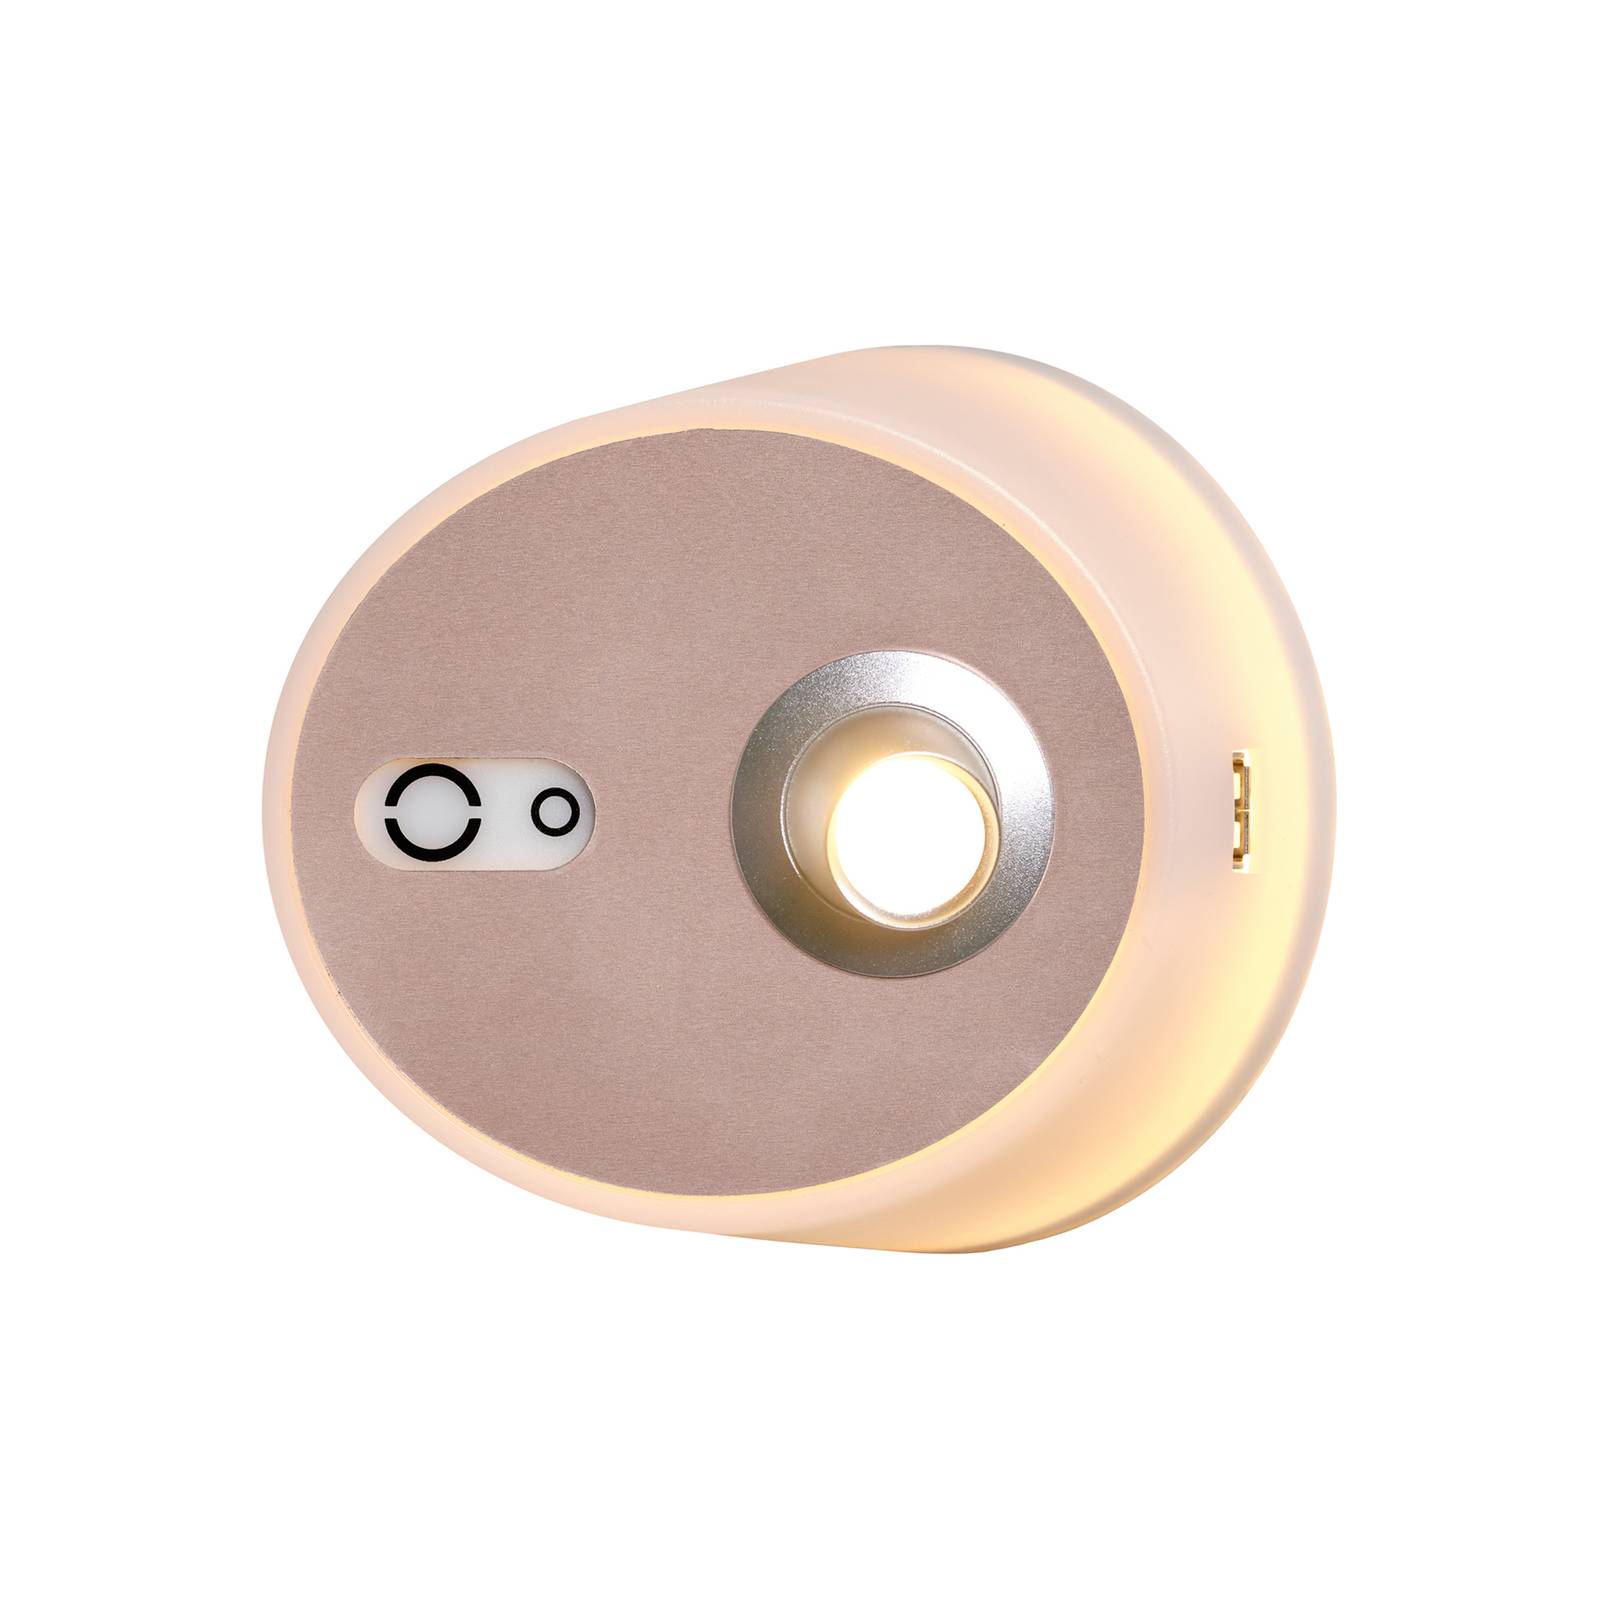 LED-Wandlampe Zoom, Spot, USB-Ausgang, pink-kupfer von Carpyen